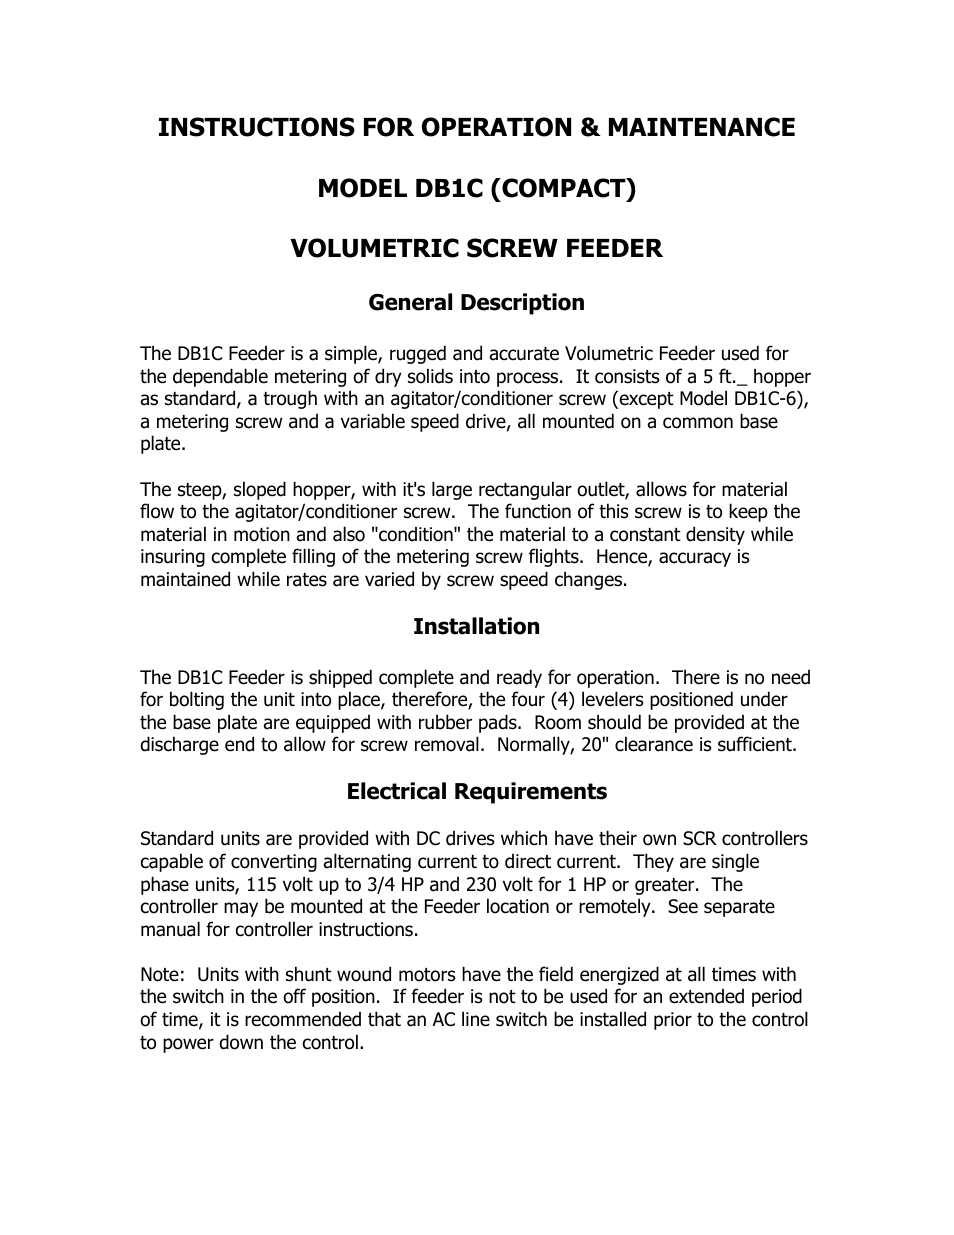 Model DBIC (compact) Volumetric Screw Feeder